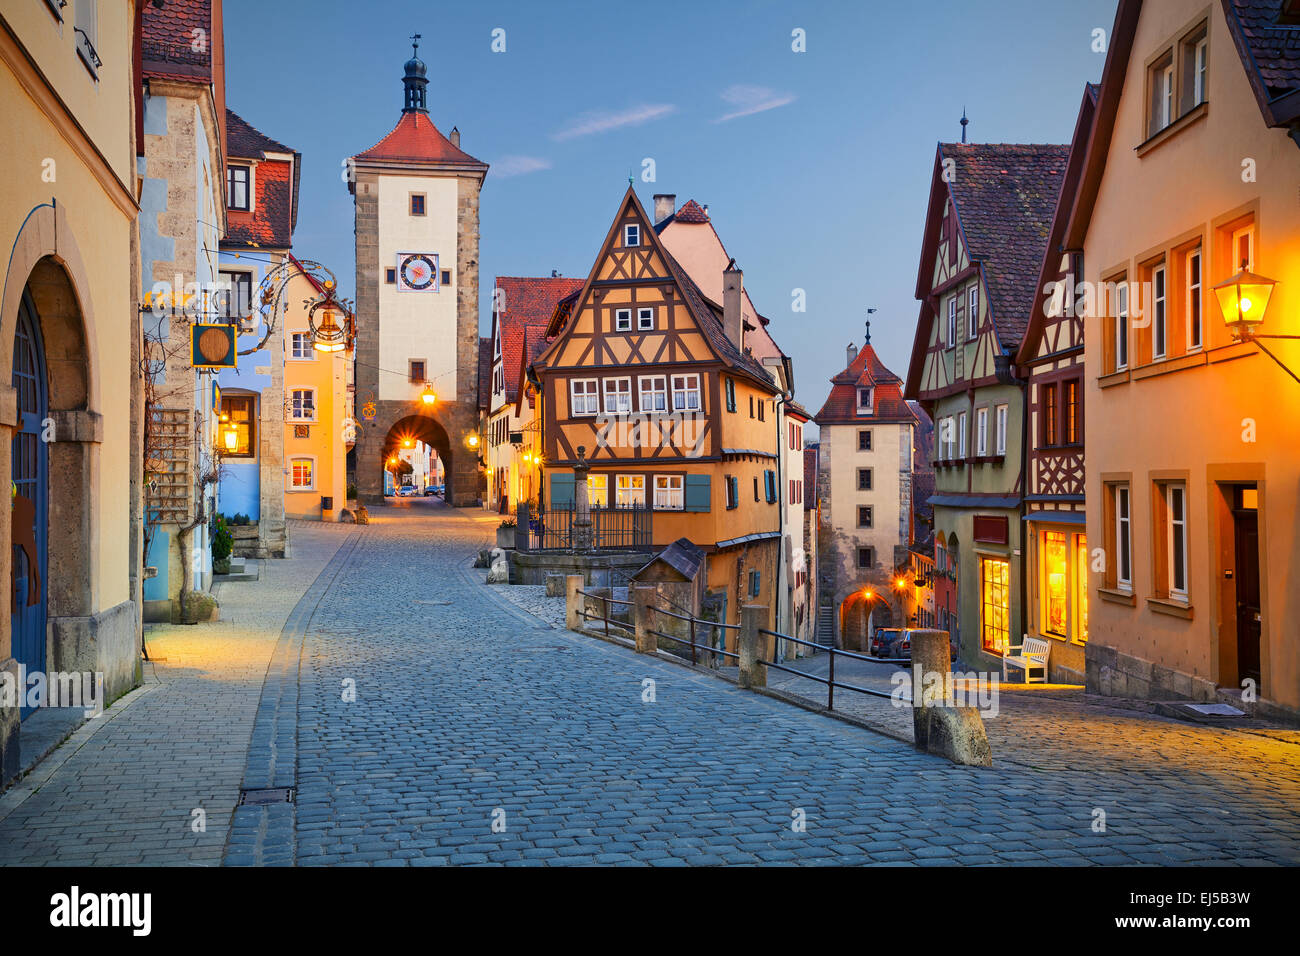 Rothenburg ob der Tauber. Image of the Rothenburg ob der Tauber a town in Bavaria, Germany. Stock Photo